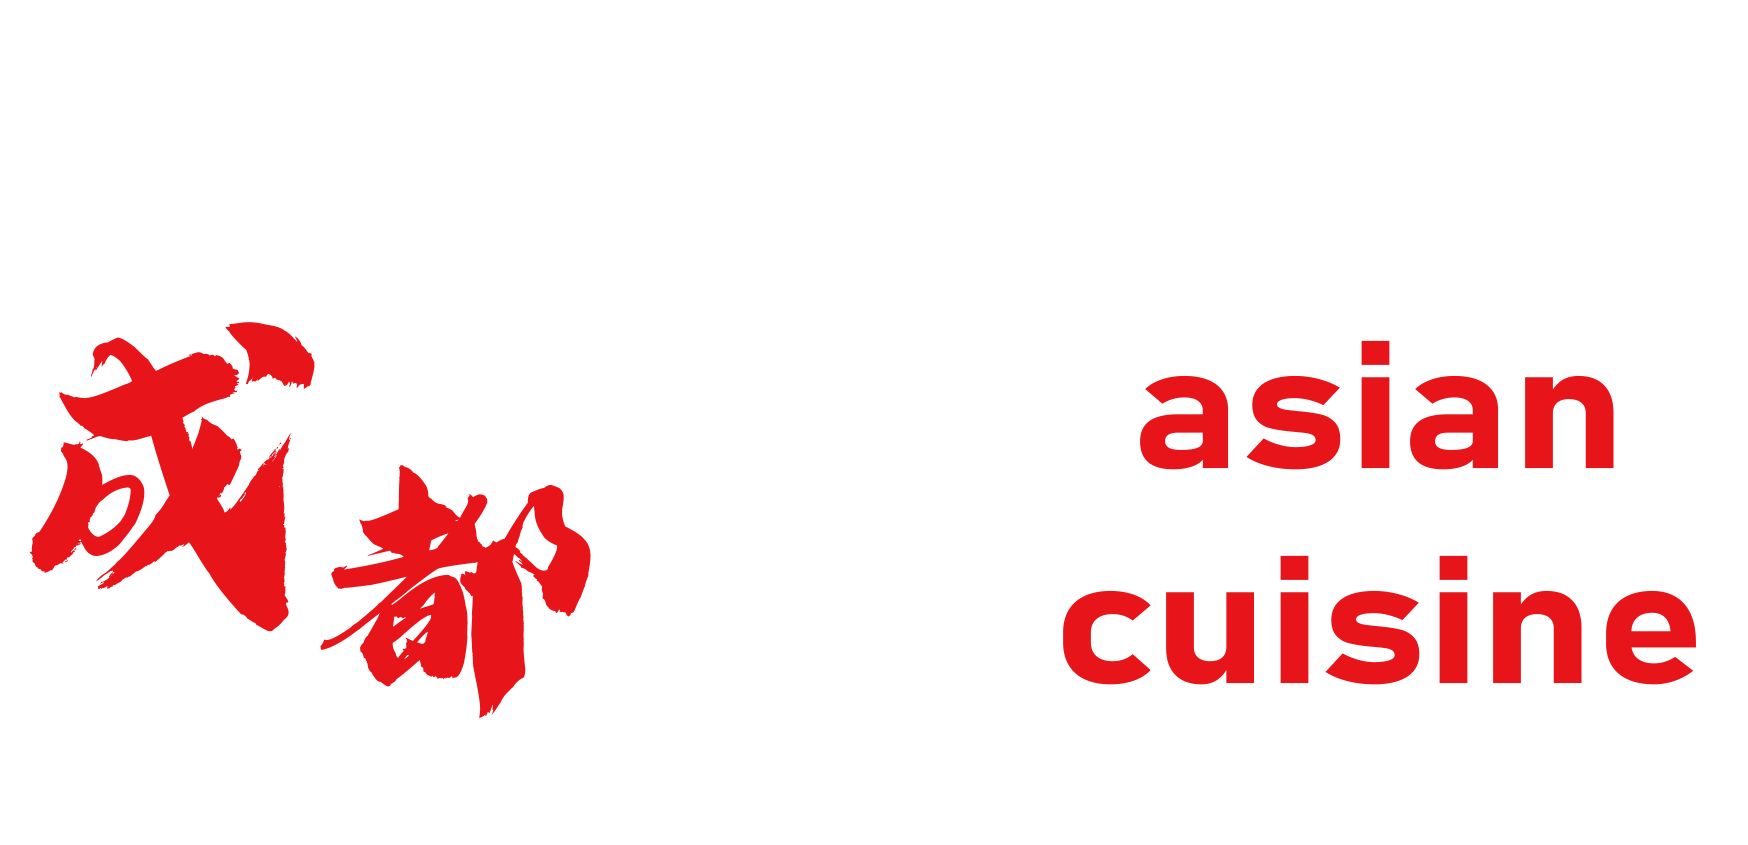 shi kitchen sichuan cuisine 成都大街小巷